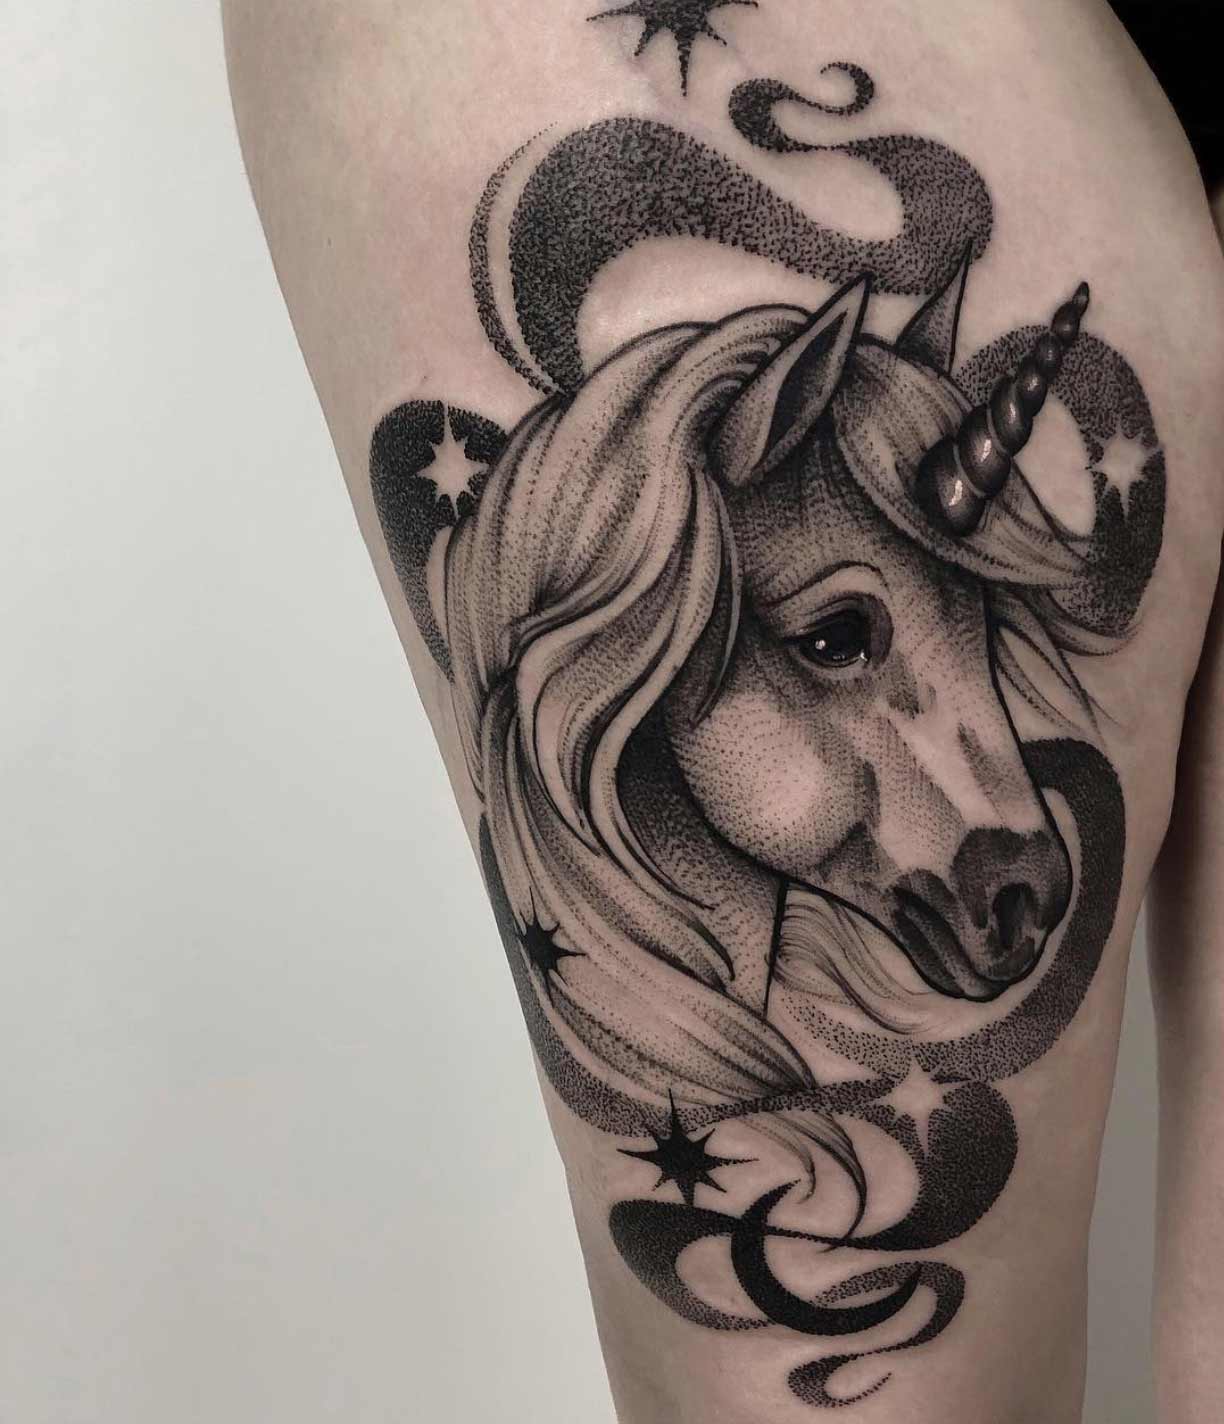 A unicorn thigh piece by Hipner